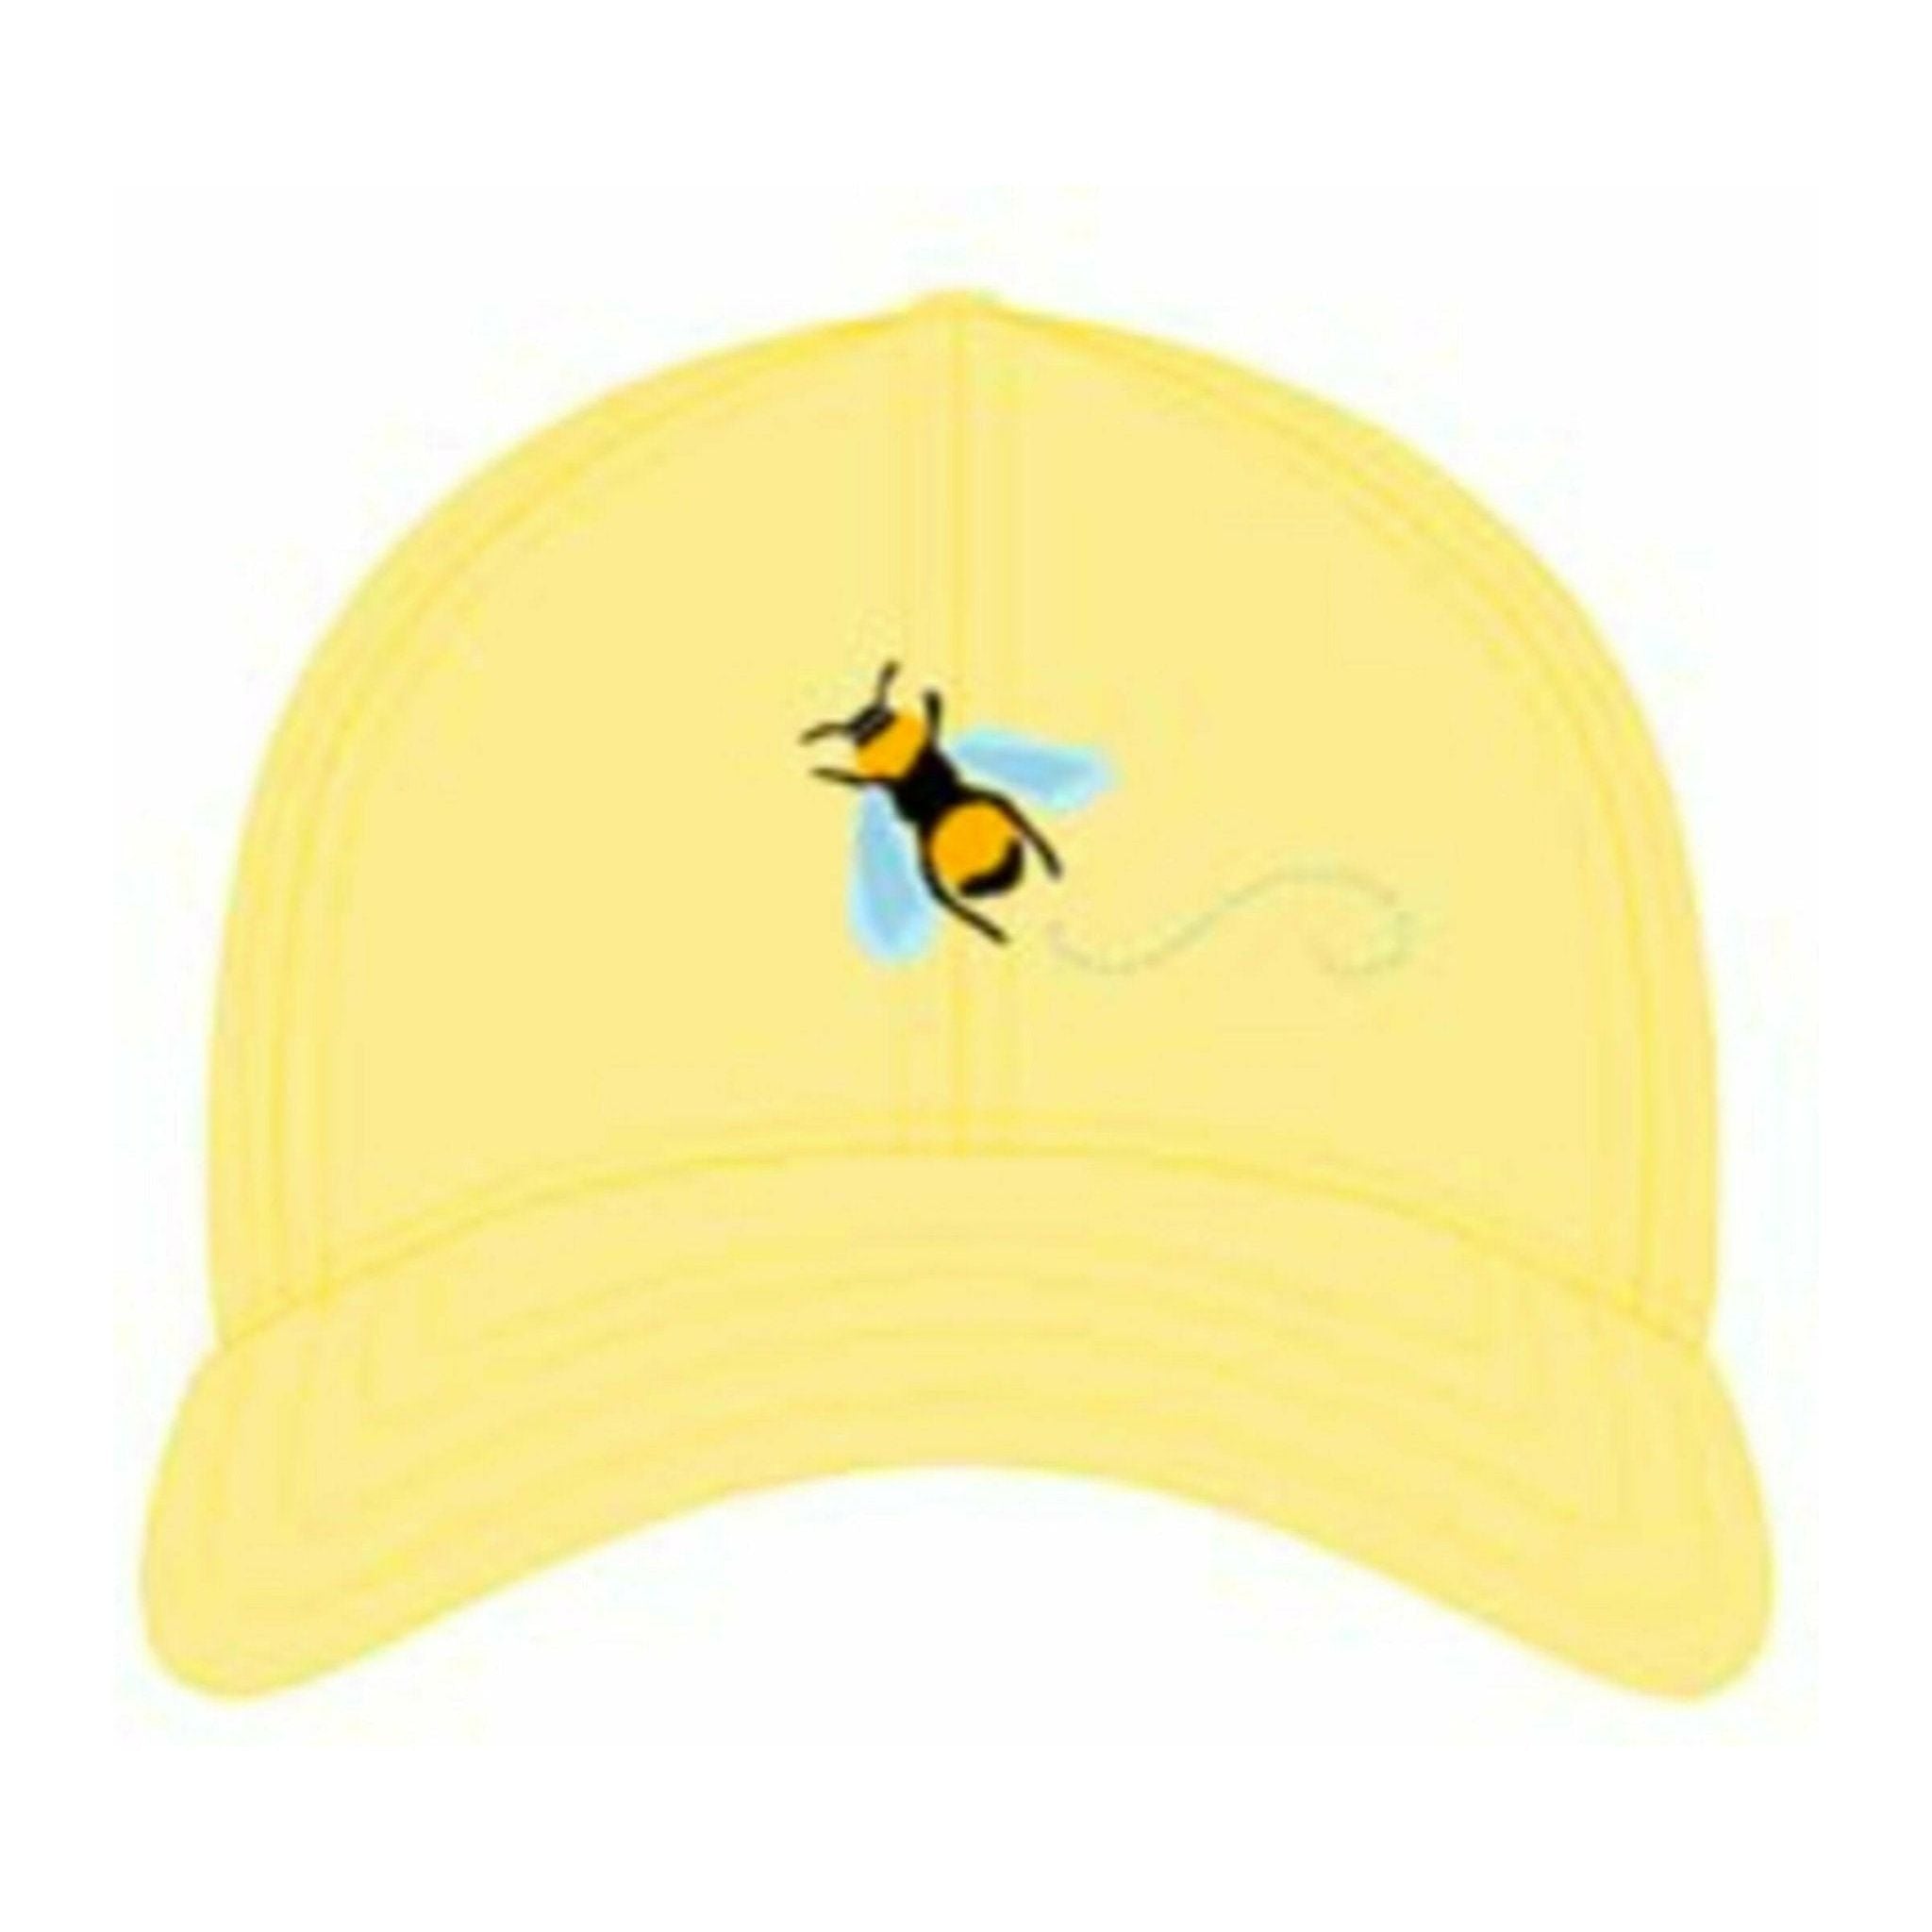 Baseball Hat - Honey Bee on Light Yellow - Collins & Conley